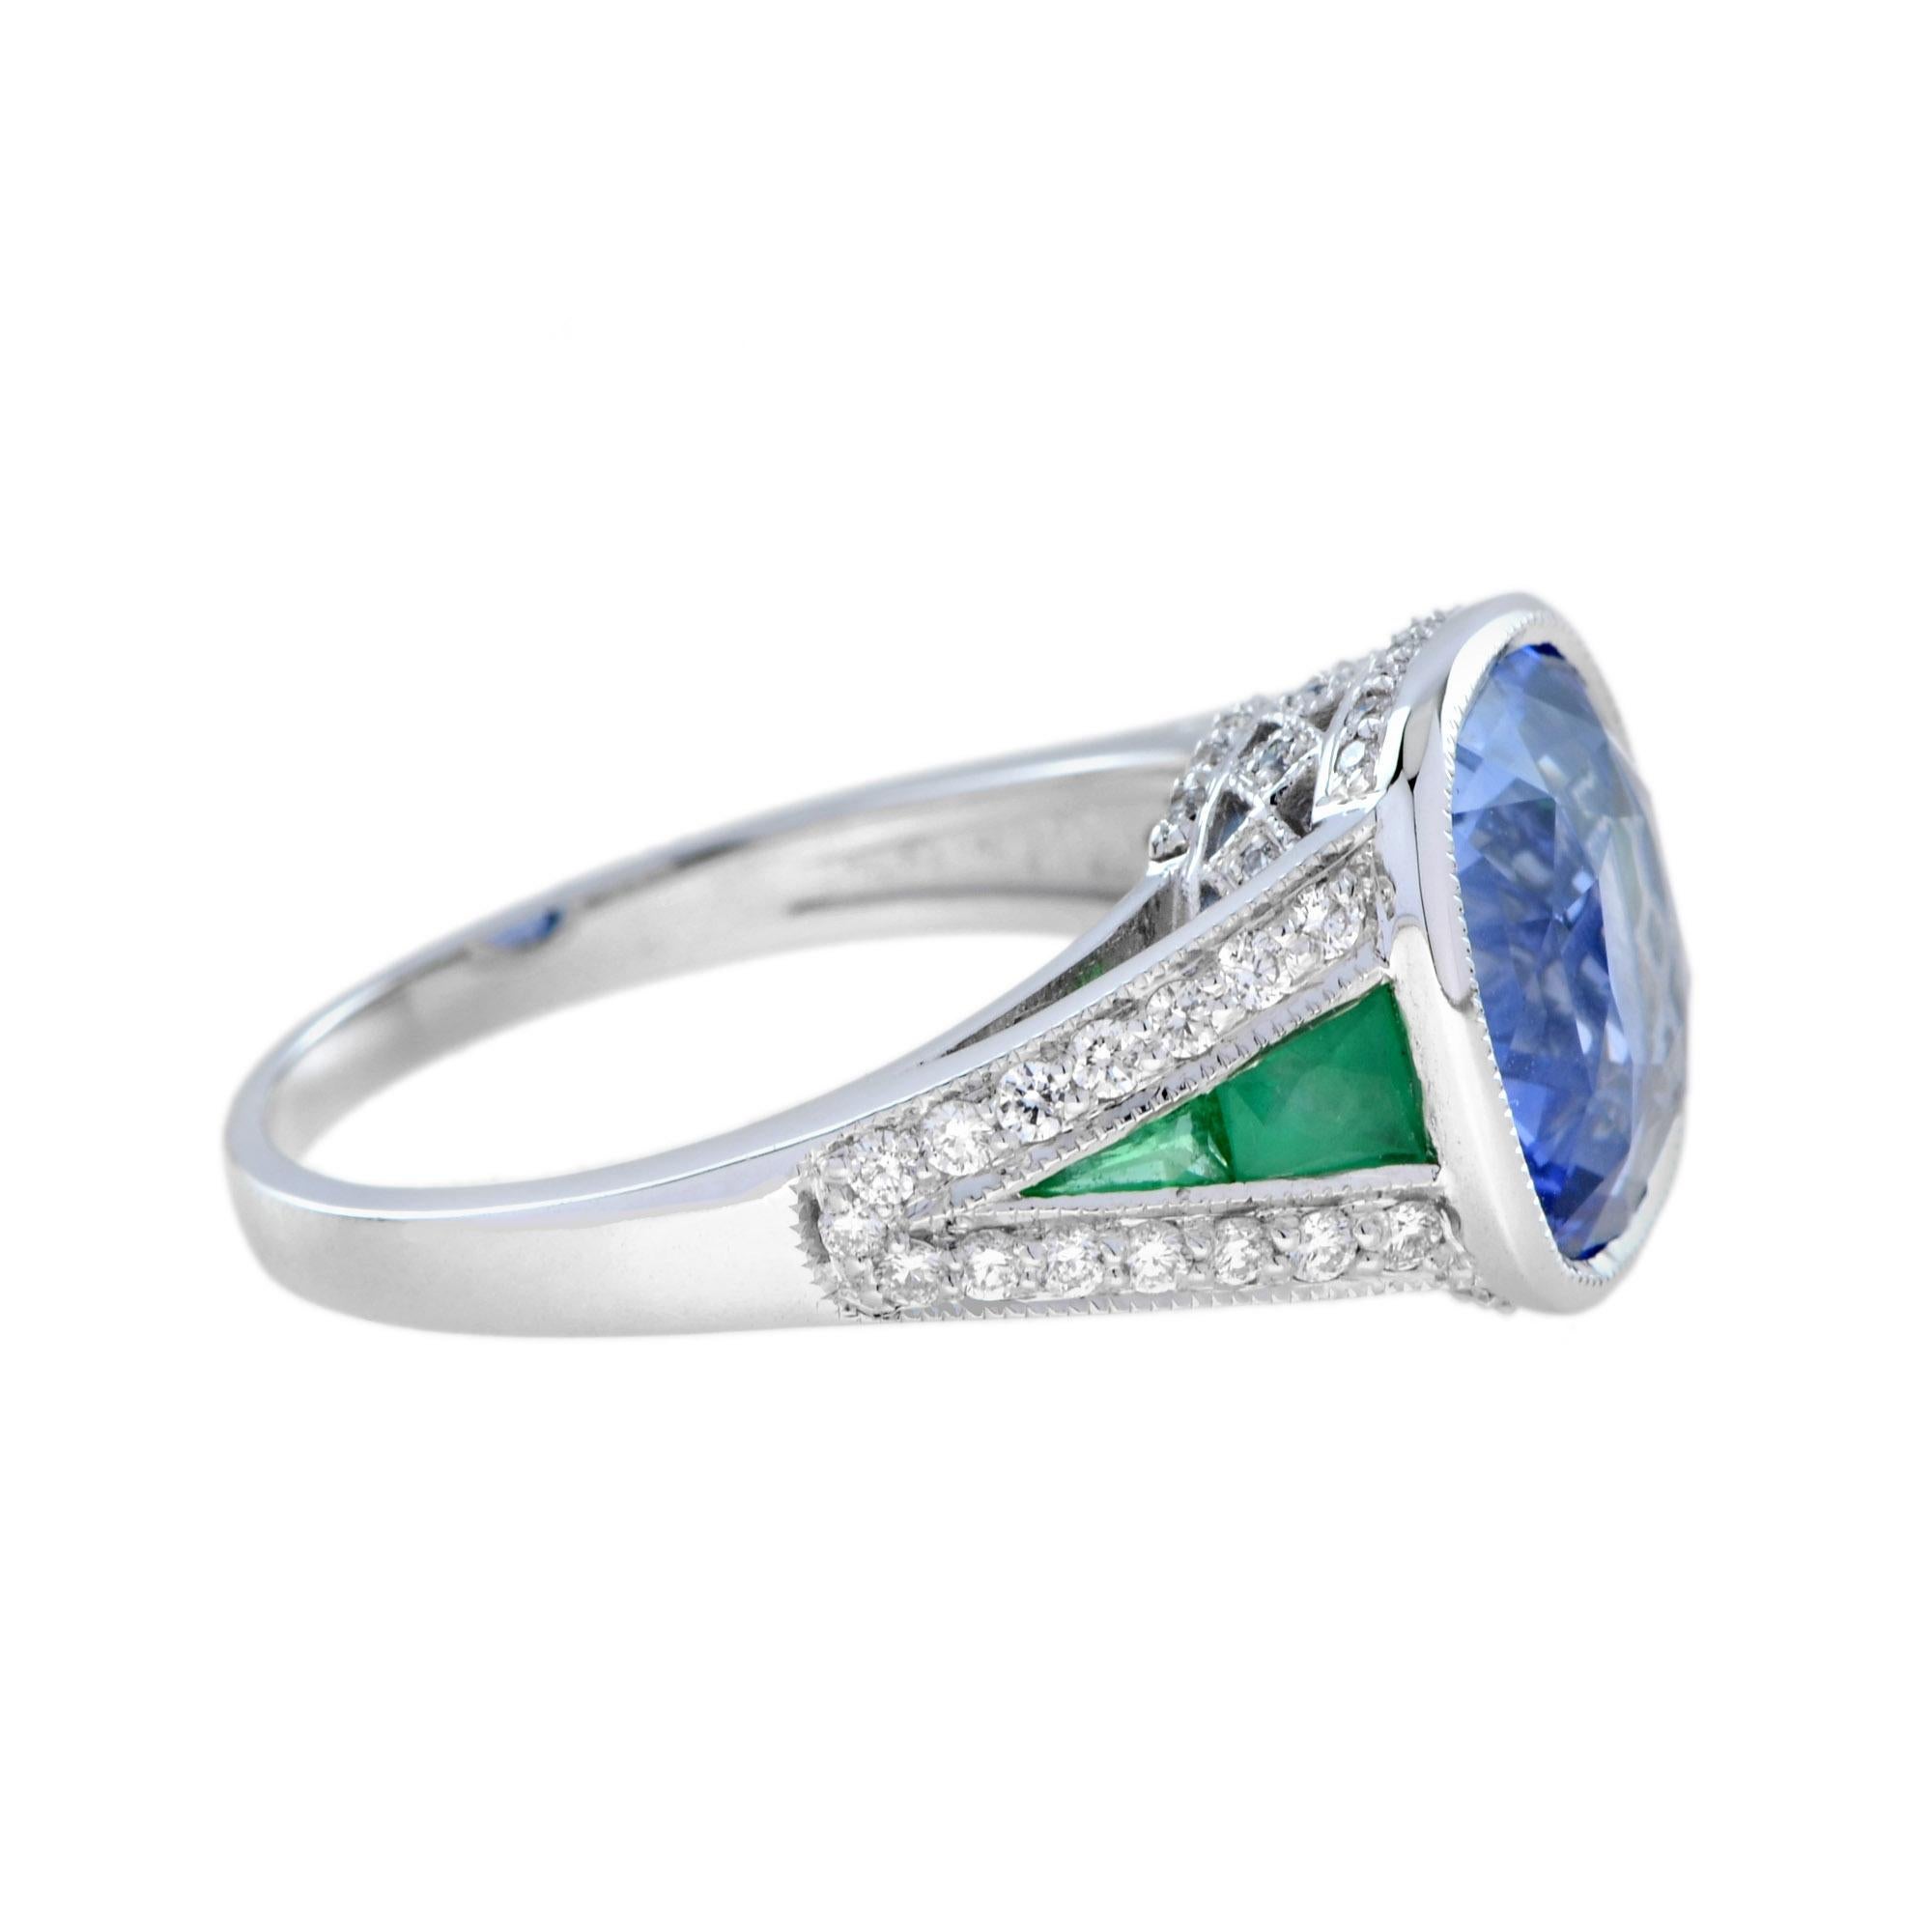 Certified 4.47 Ct. Ceylon Sapphire Emerald Diamond Ring in 18K White Gold For Sale 1